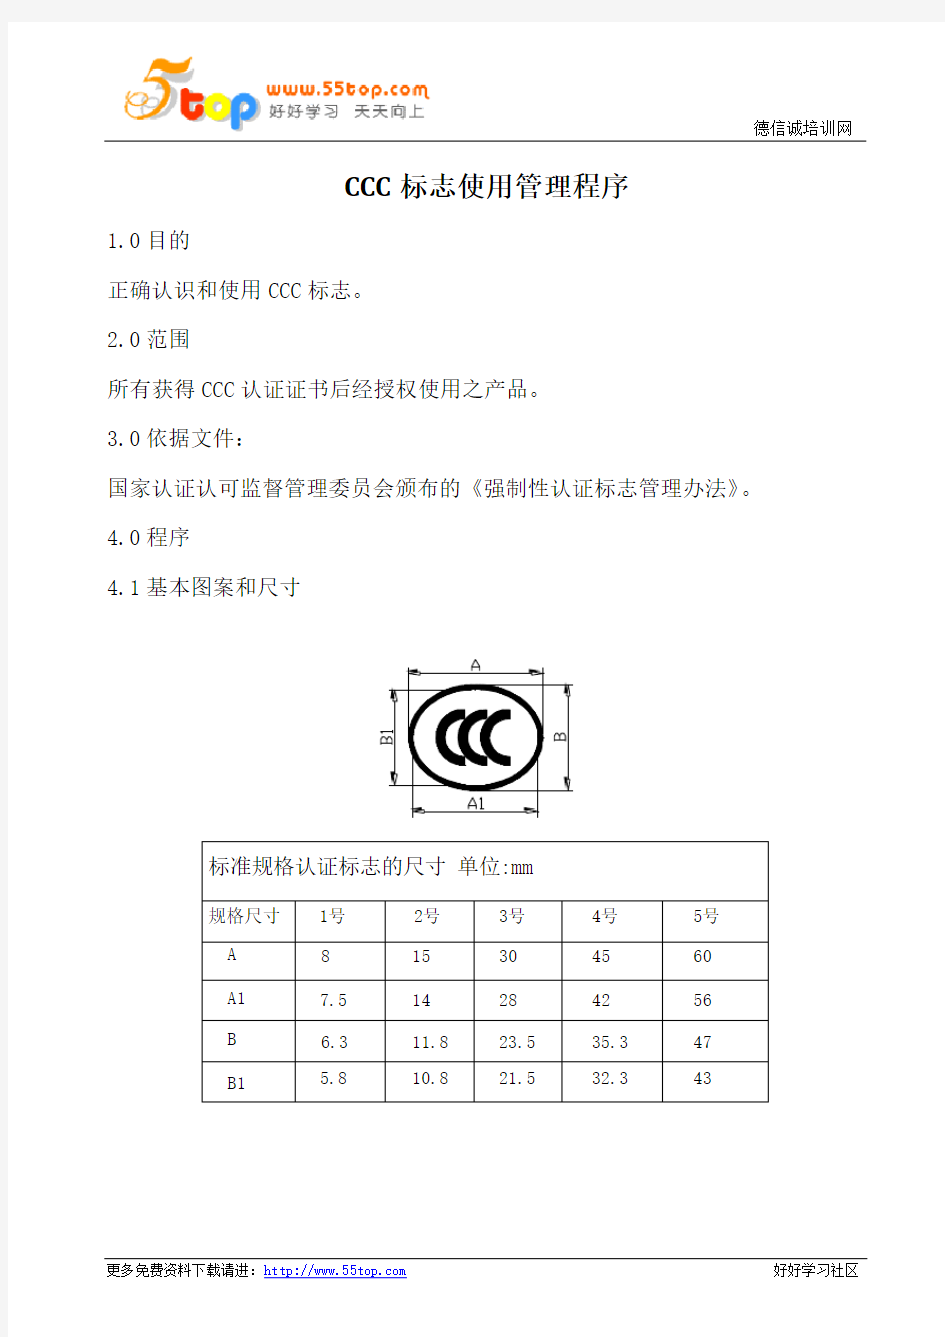 CCC标志使用管理程序